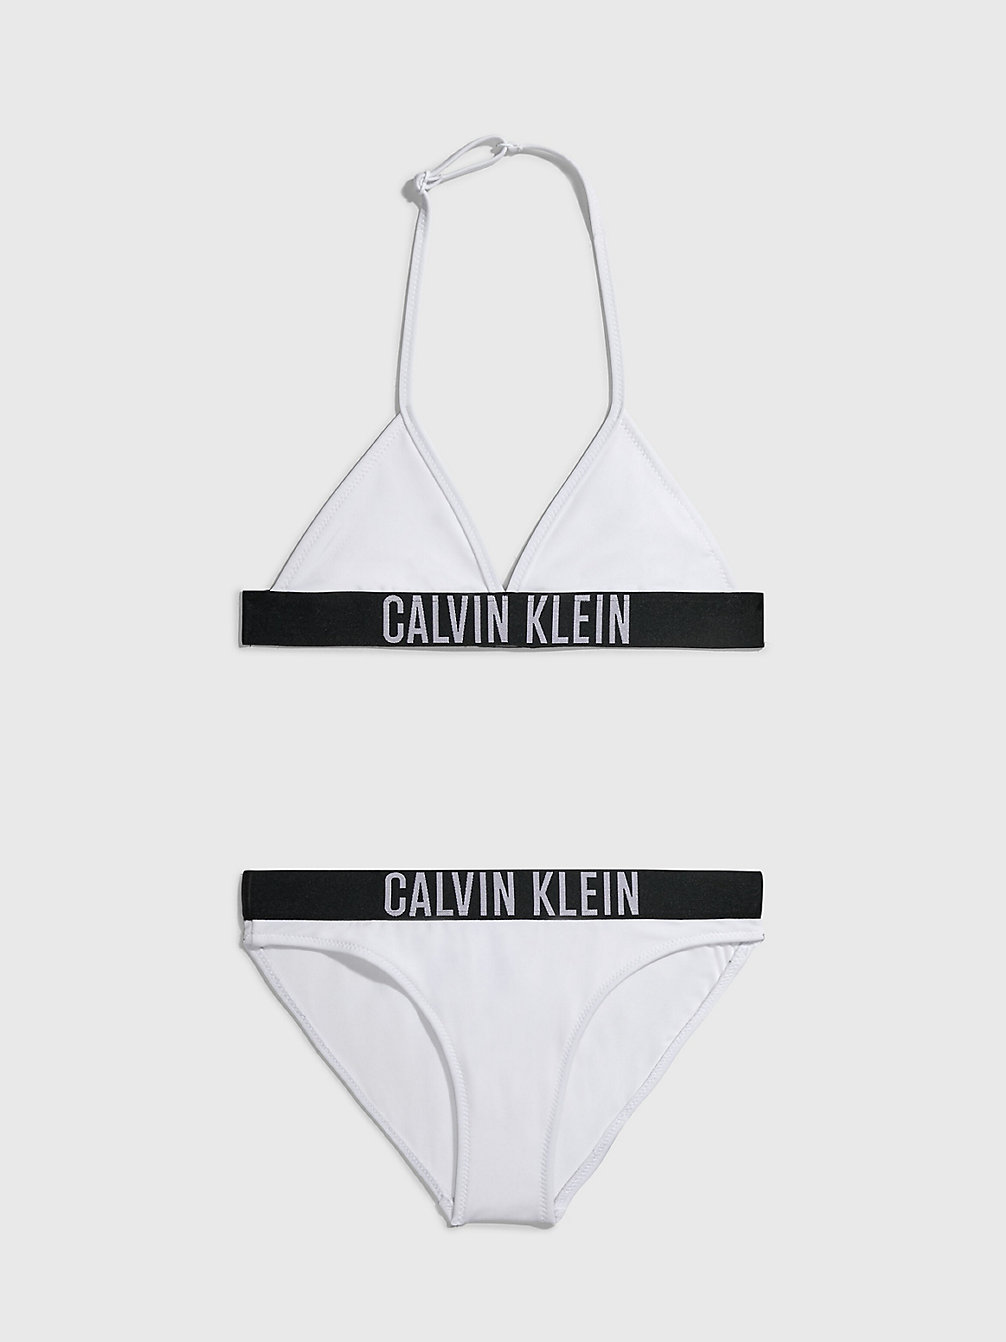 PVH CLASSIC WHITE Ensemble Bikini Triangle Pour Fille - Intense Power undefined girls Calvin Klein